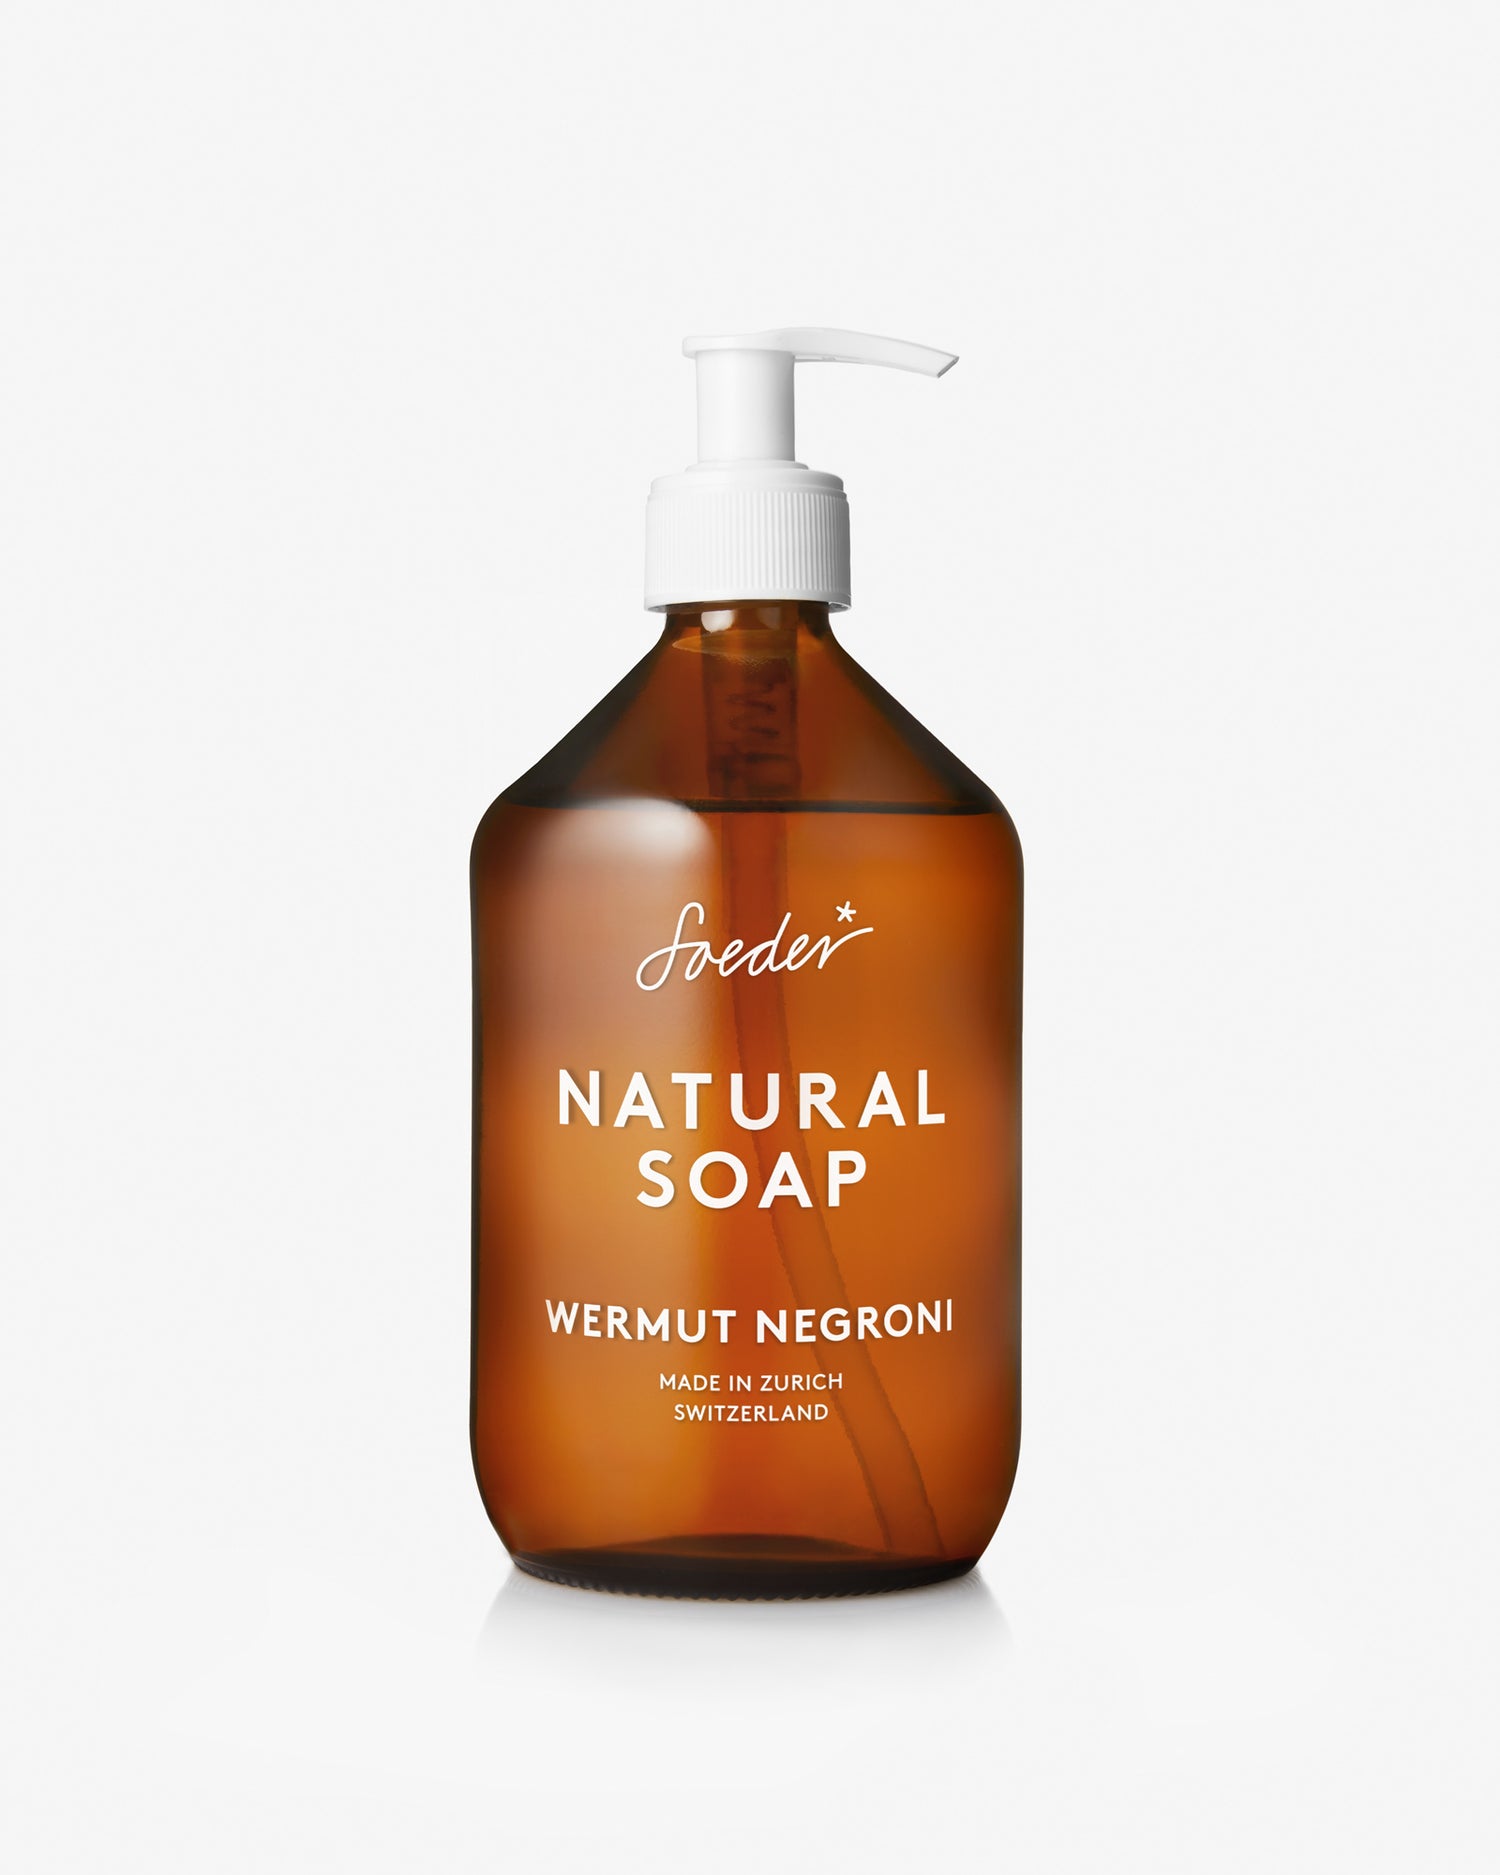 NATURAL SOAP WERMUT NEGRONI - Soeder